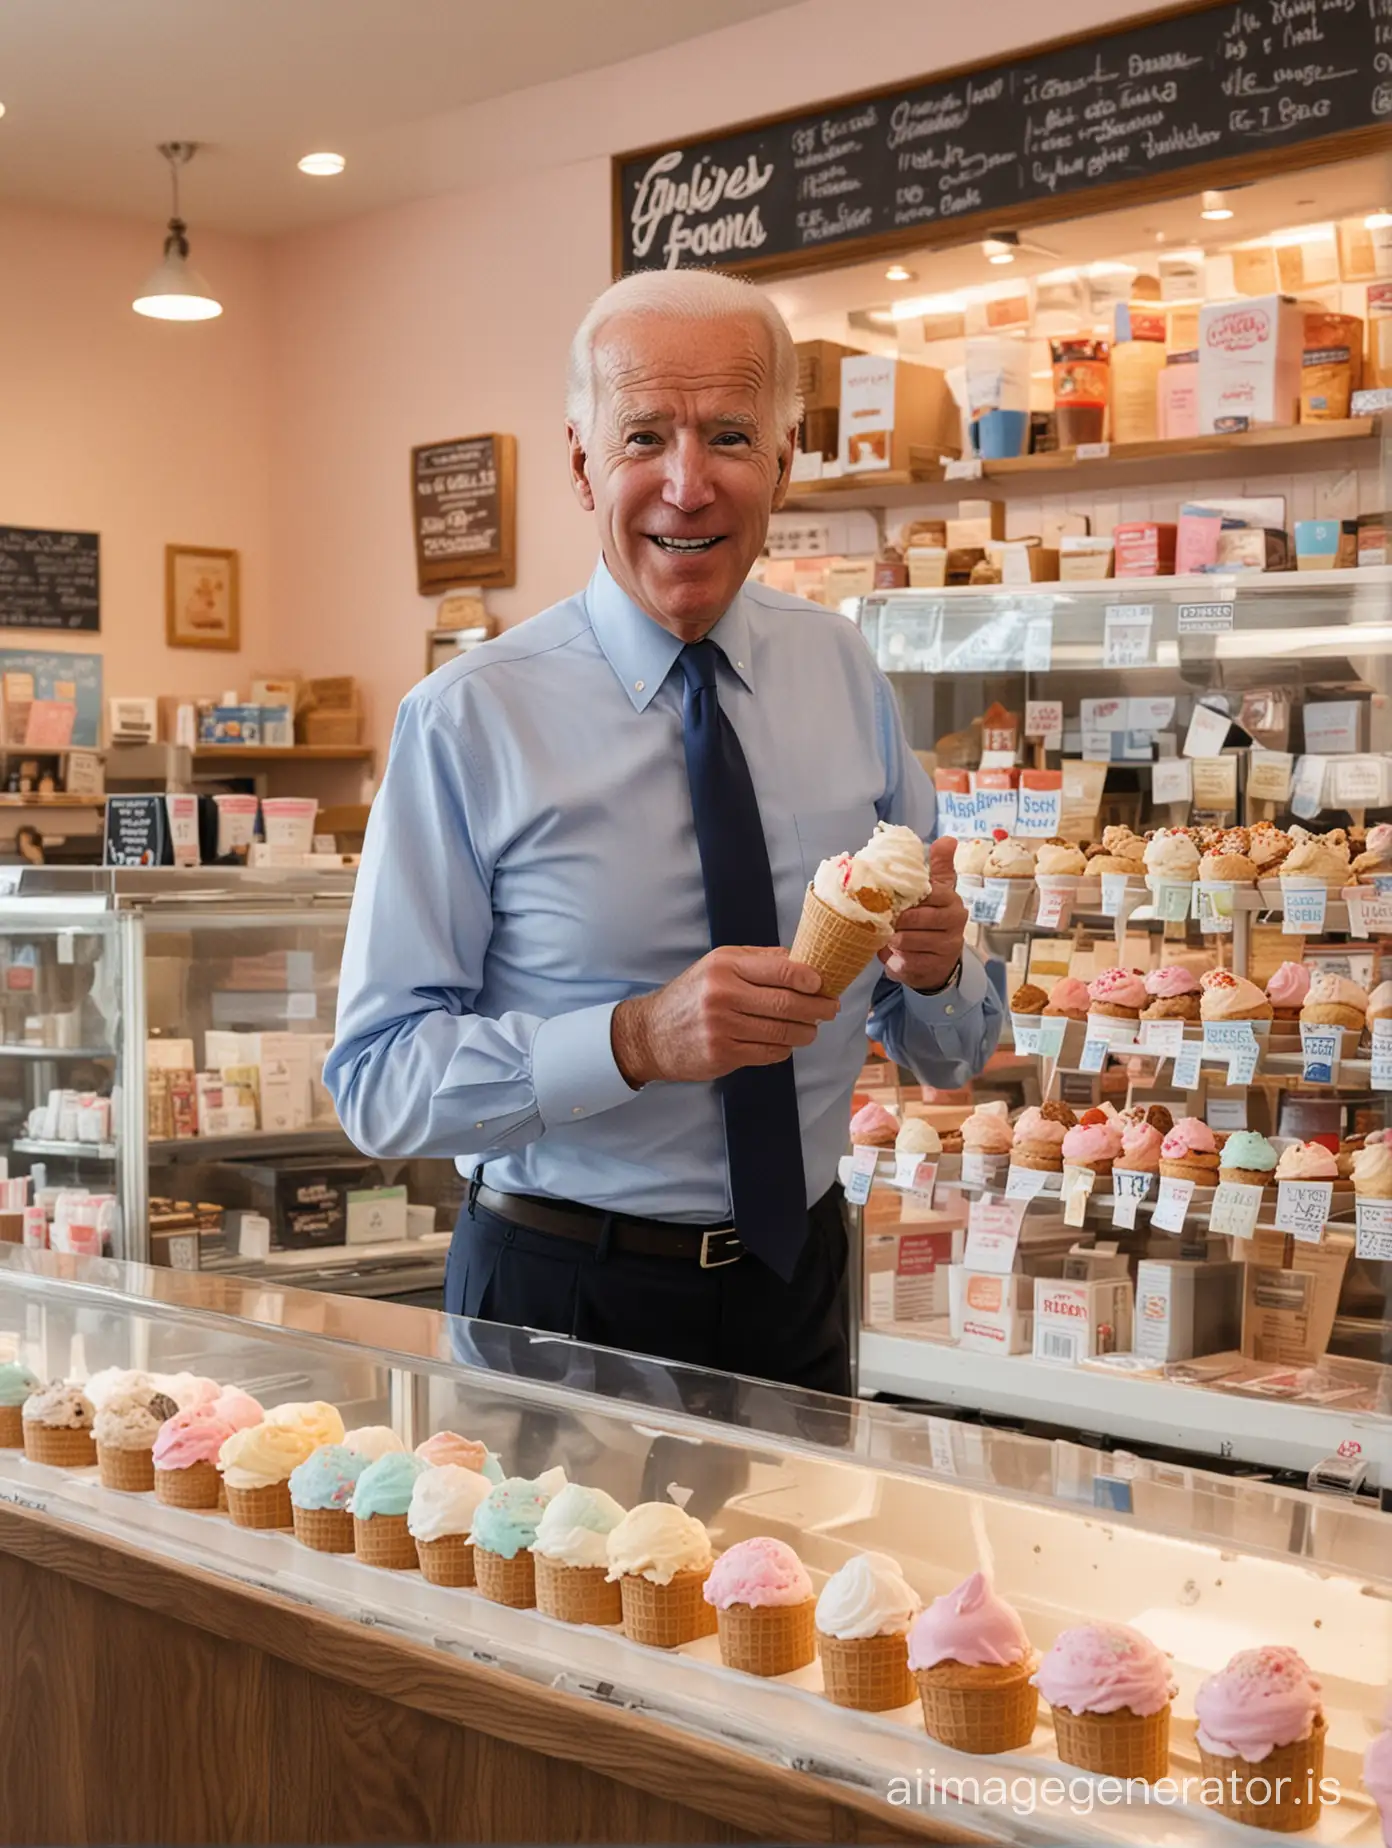 Joe-Biden-Selling-Ice-Cream-in-a-Cozy-Ice-Cream-Parlor